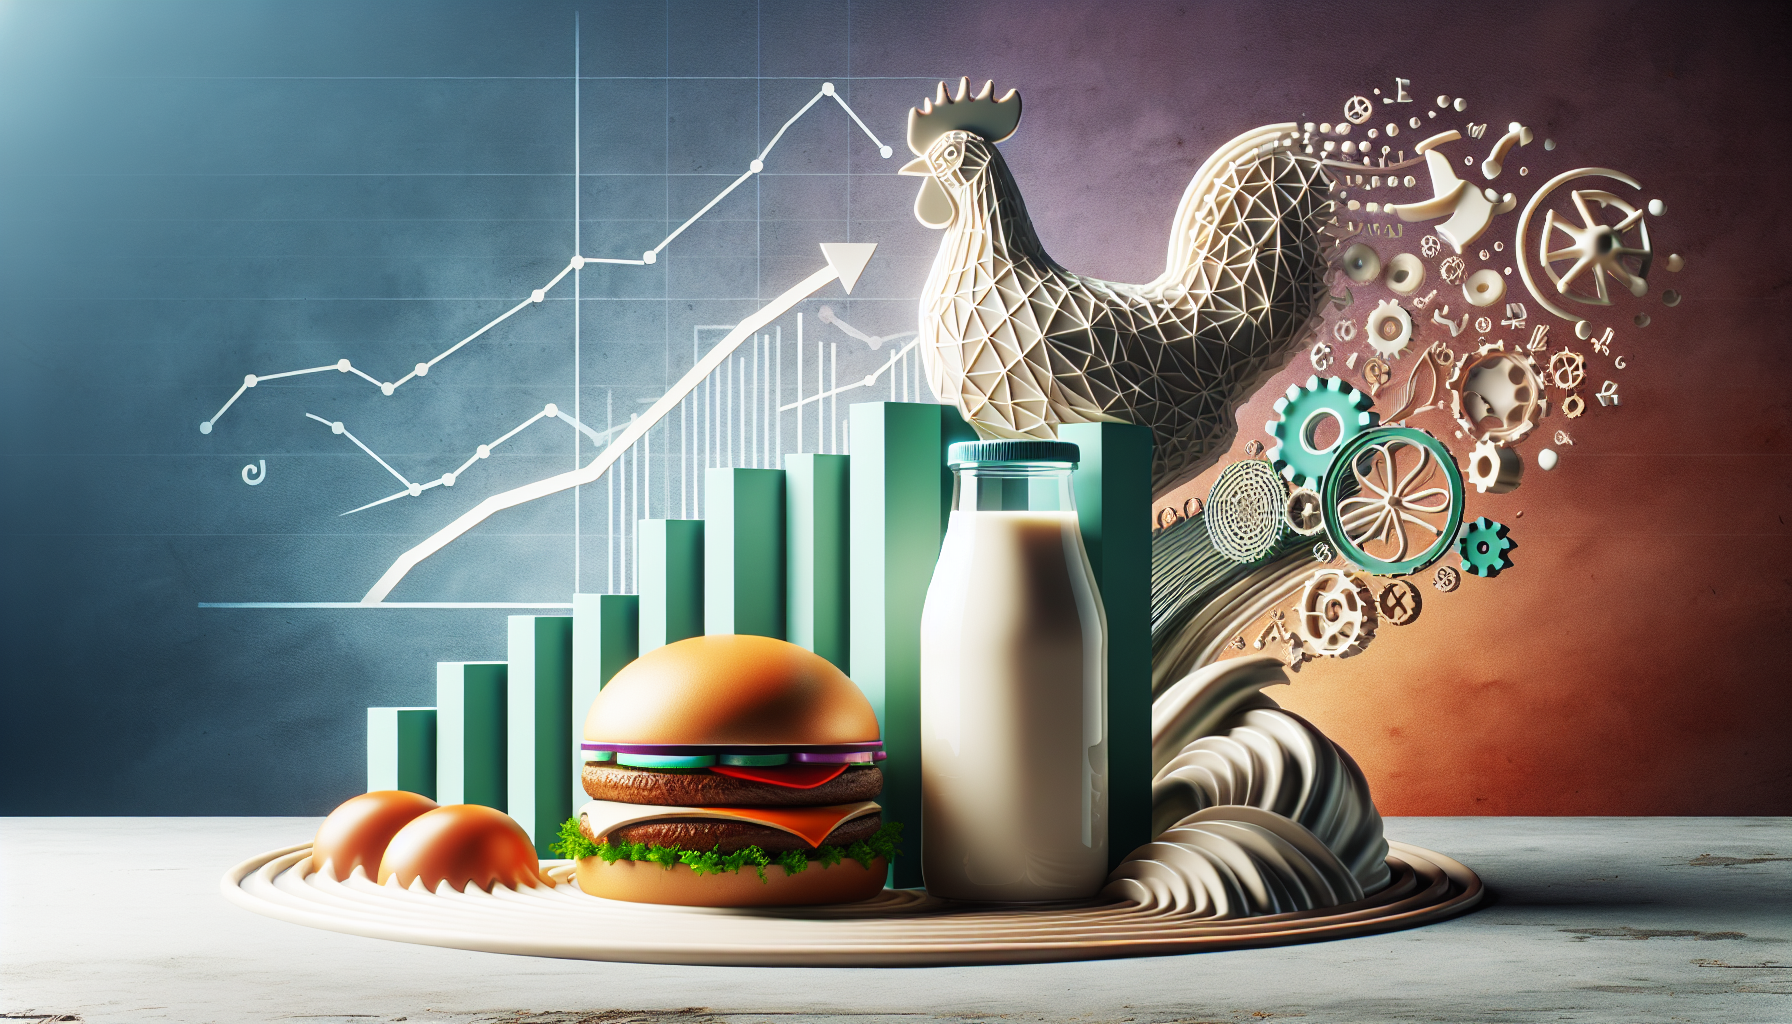 Artistic representation of alternative food technology stocks